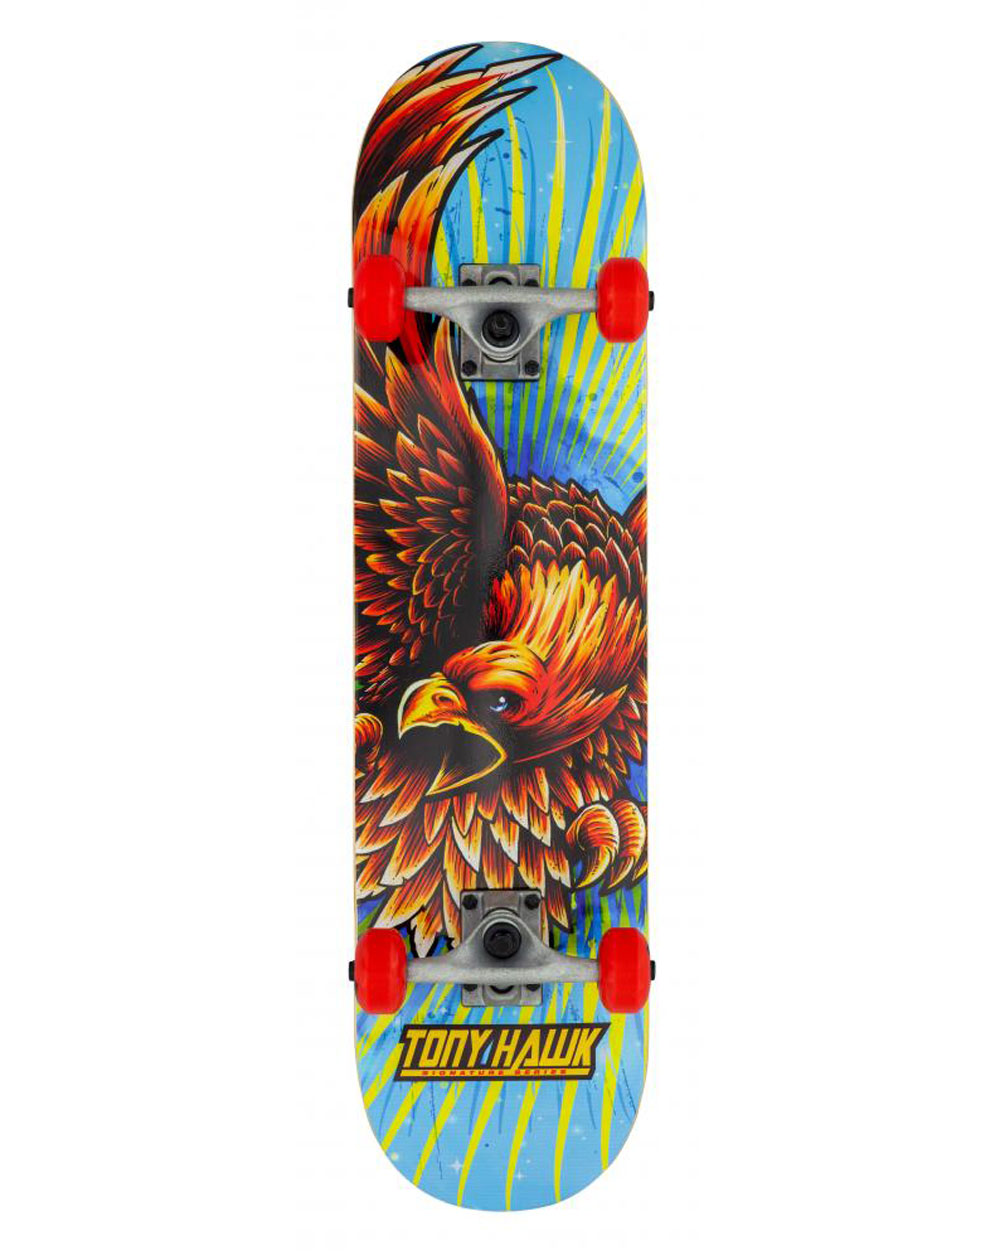 Tony Hawk Skateboard Completo Golden Hawk 7.75"